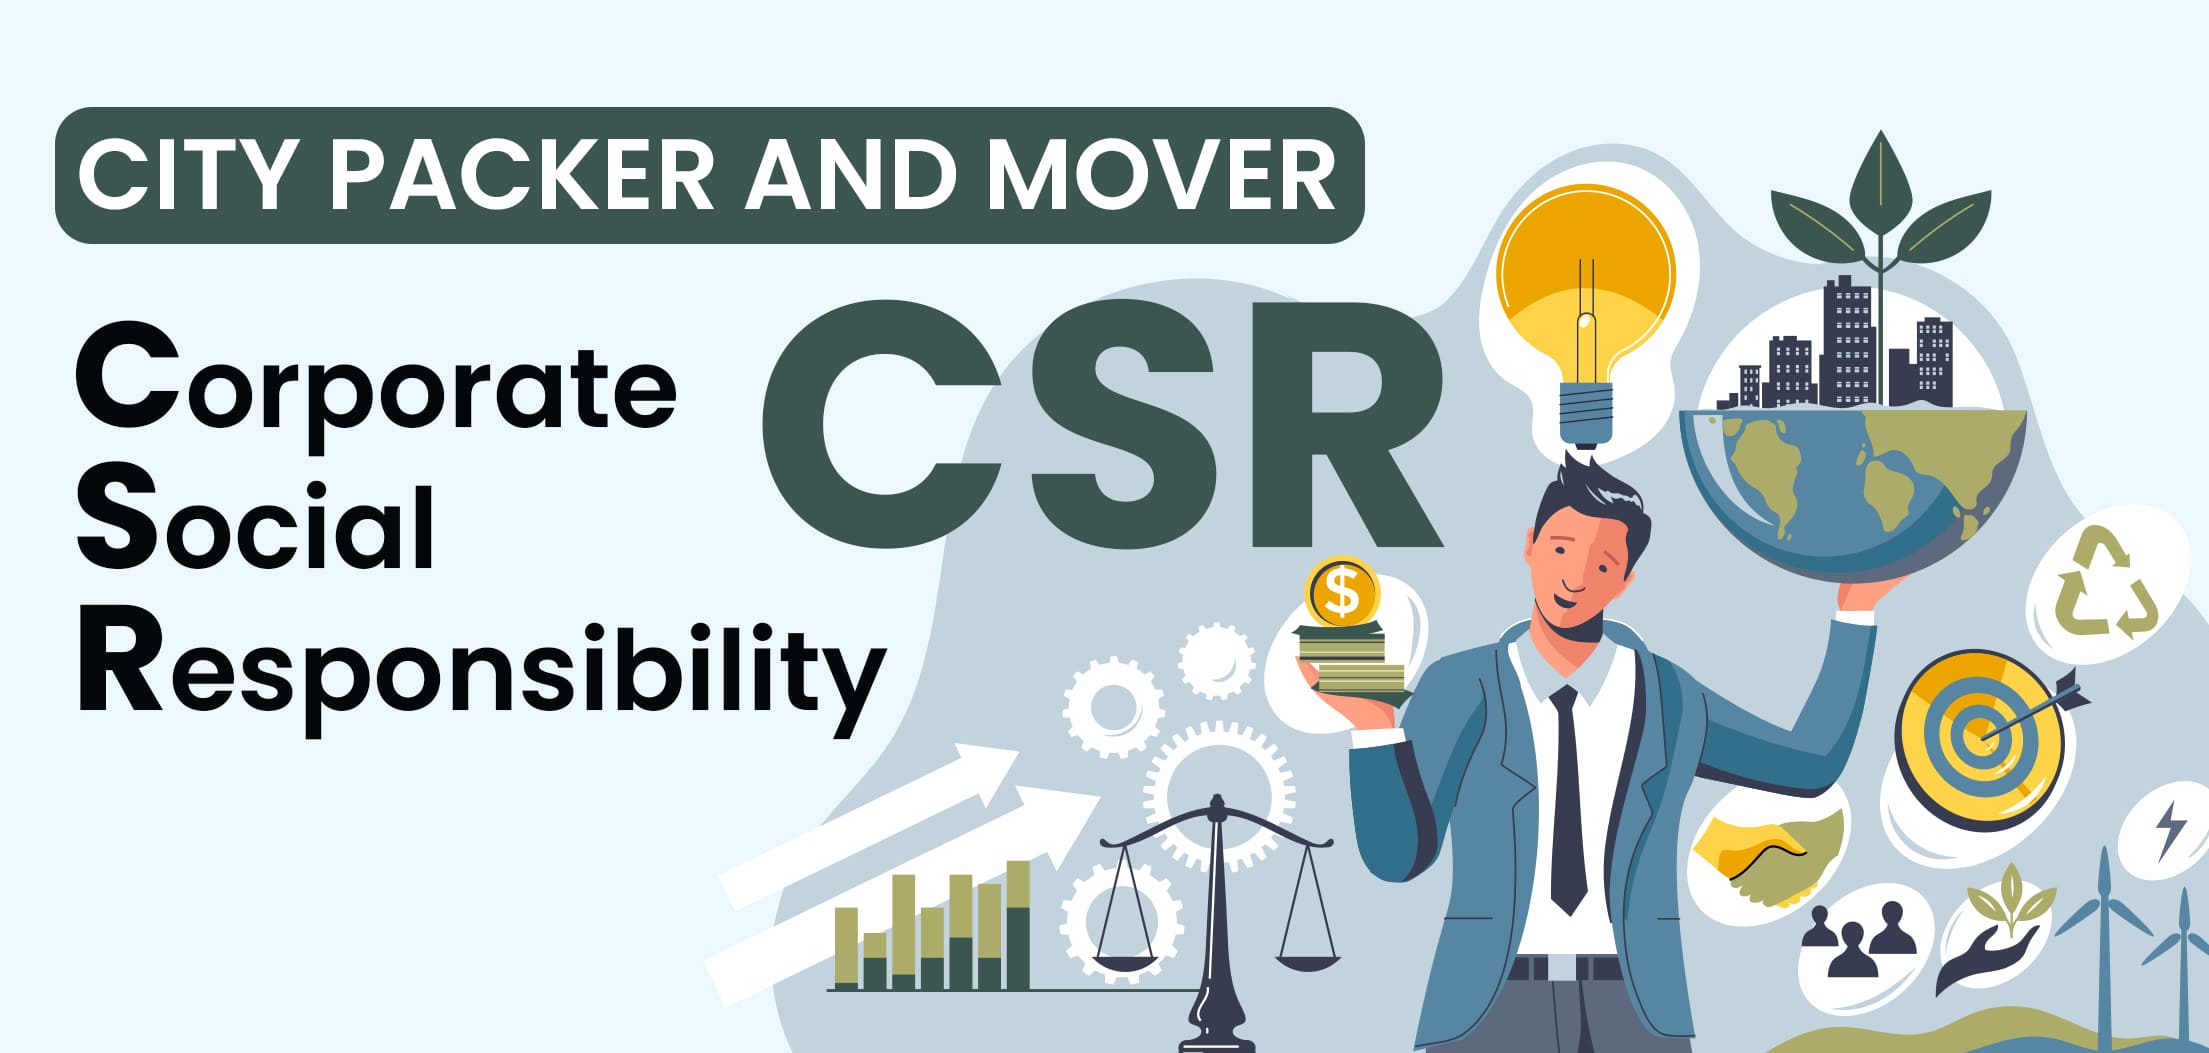 City Packer & Movers CSR